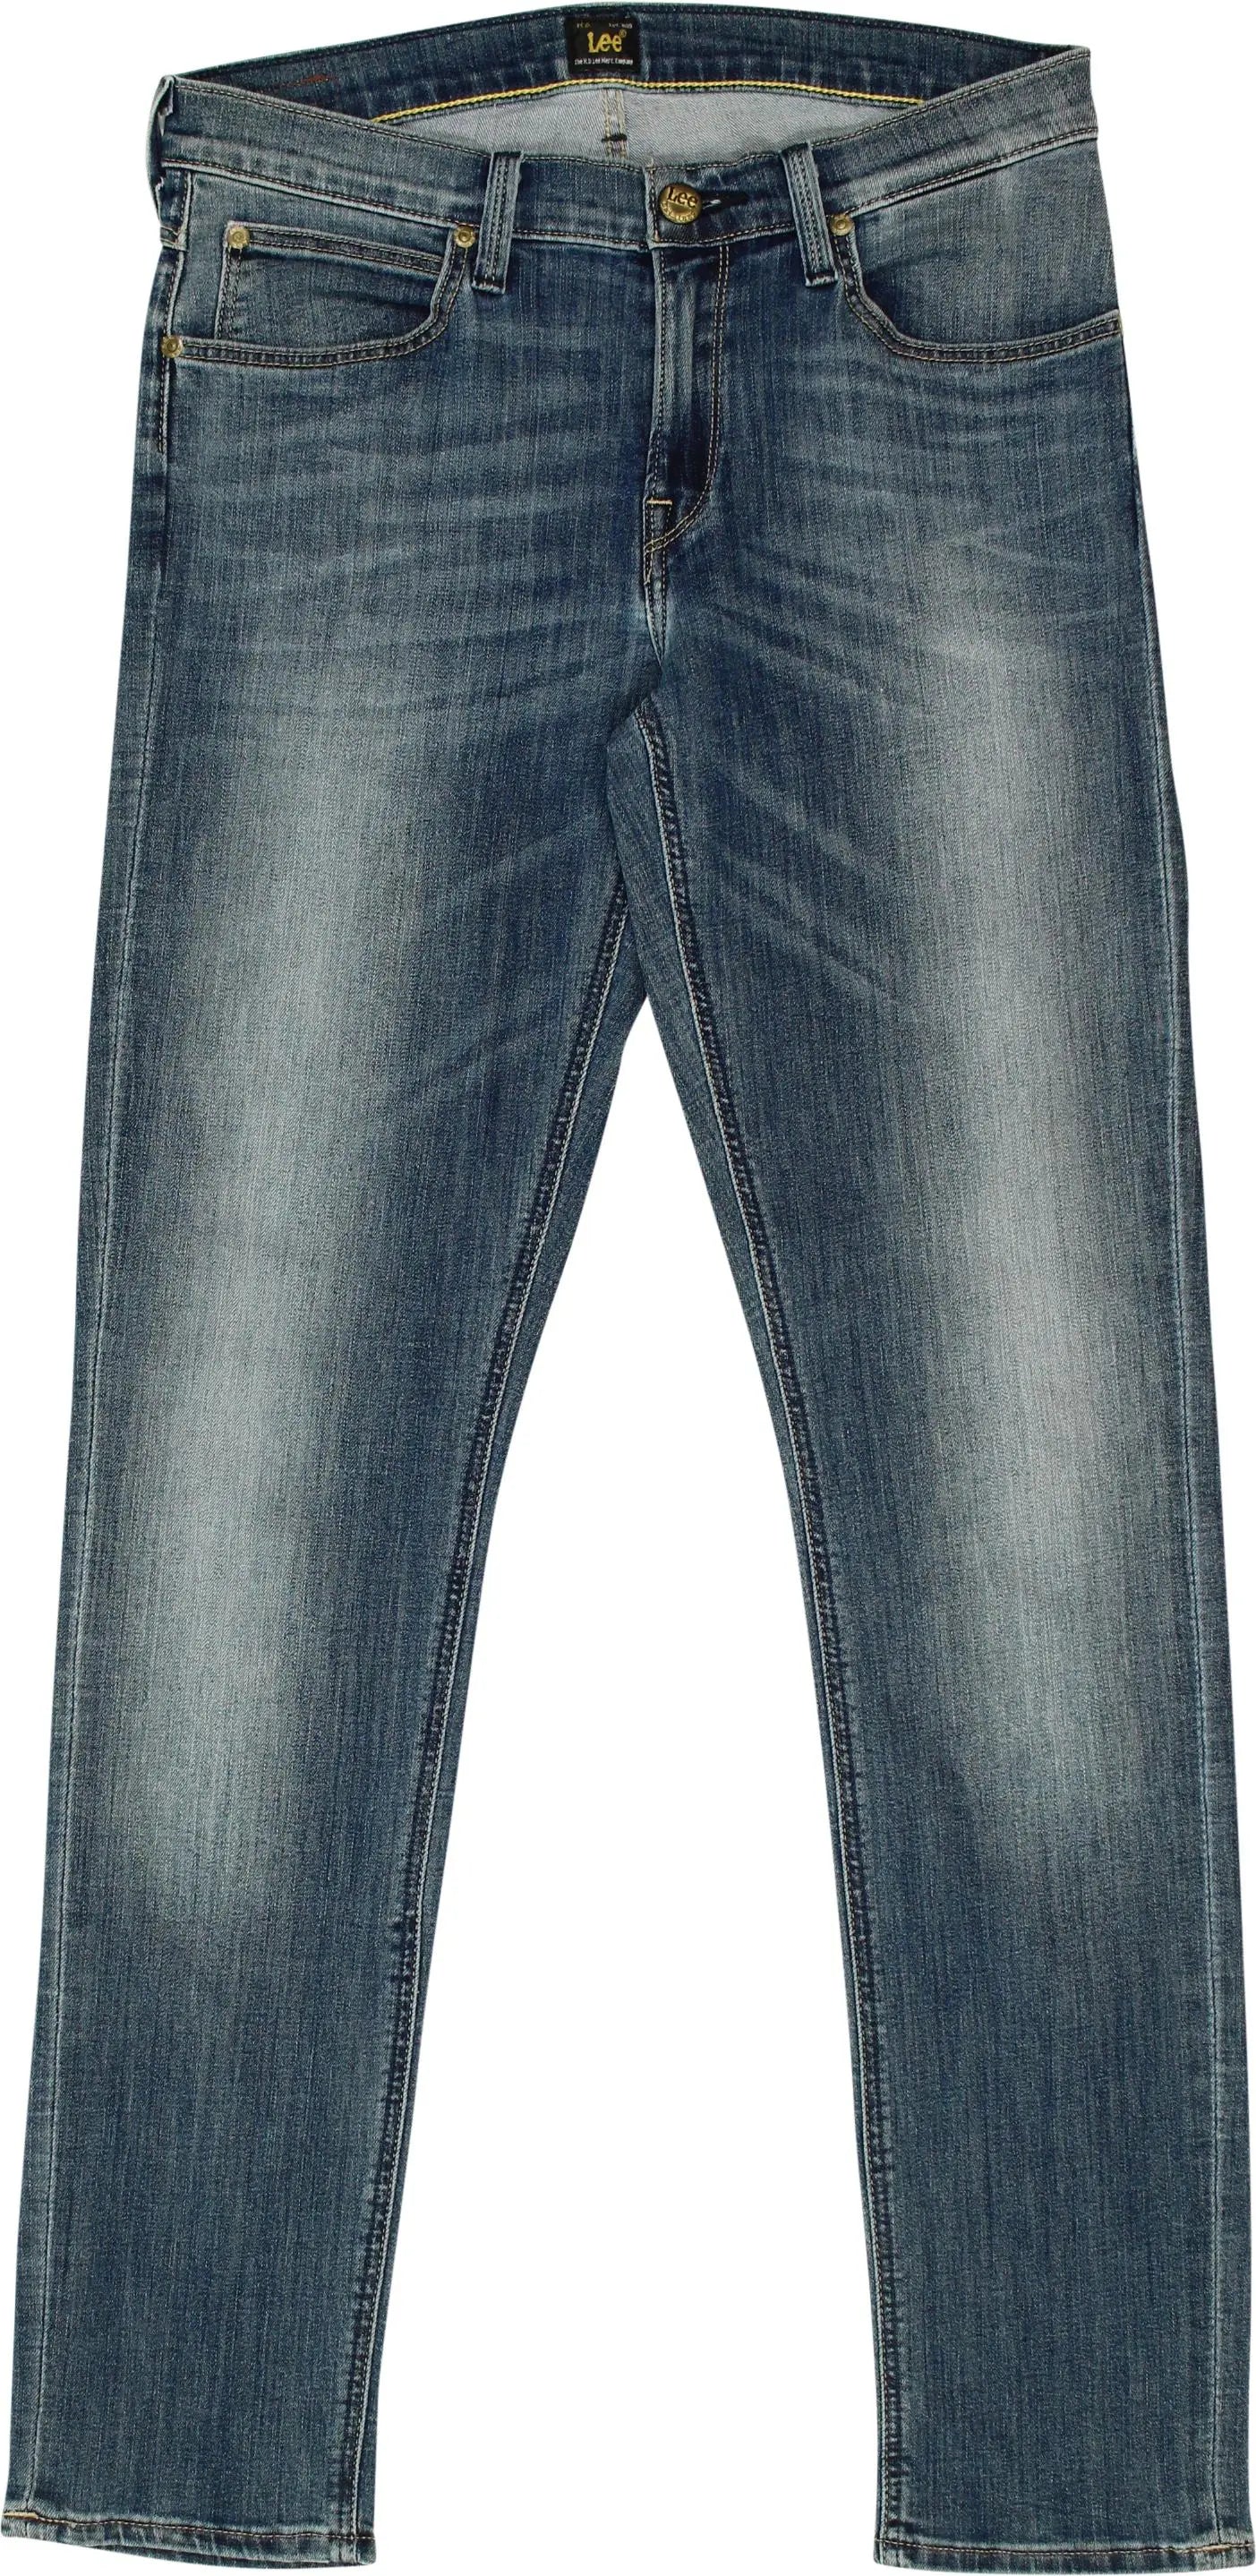 Lee - Lee Jade Skinny Jeans- ThriftTale.com - Vintage and second handclothing